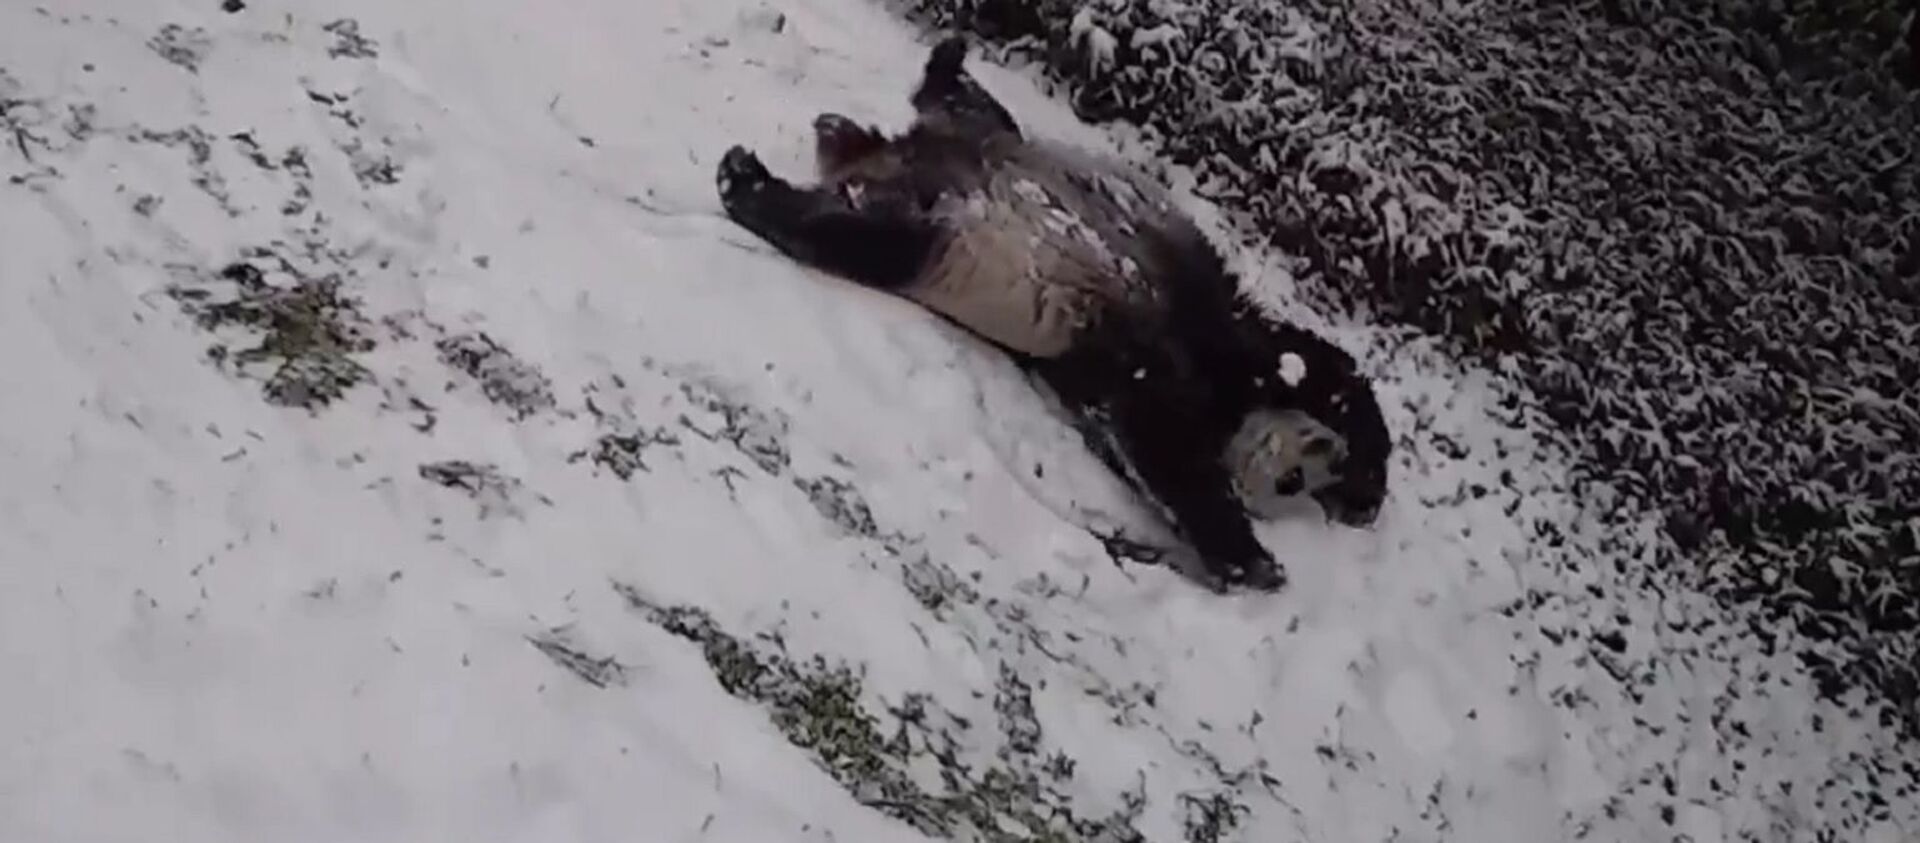 Džinovska panda se igra u snegu u zoološkom vrtu u Vašingtonu - Sputnik Srbija, 1920, 01.02.2021